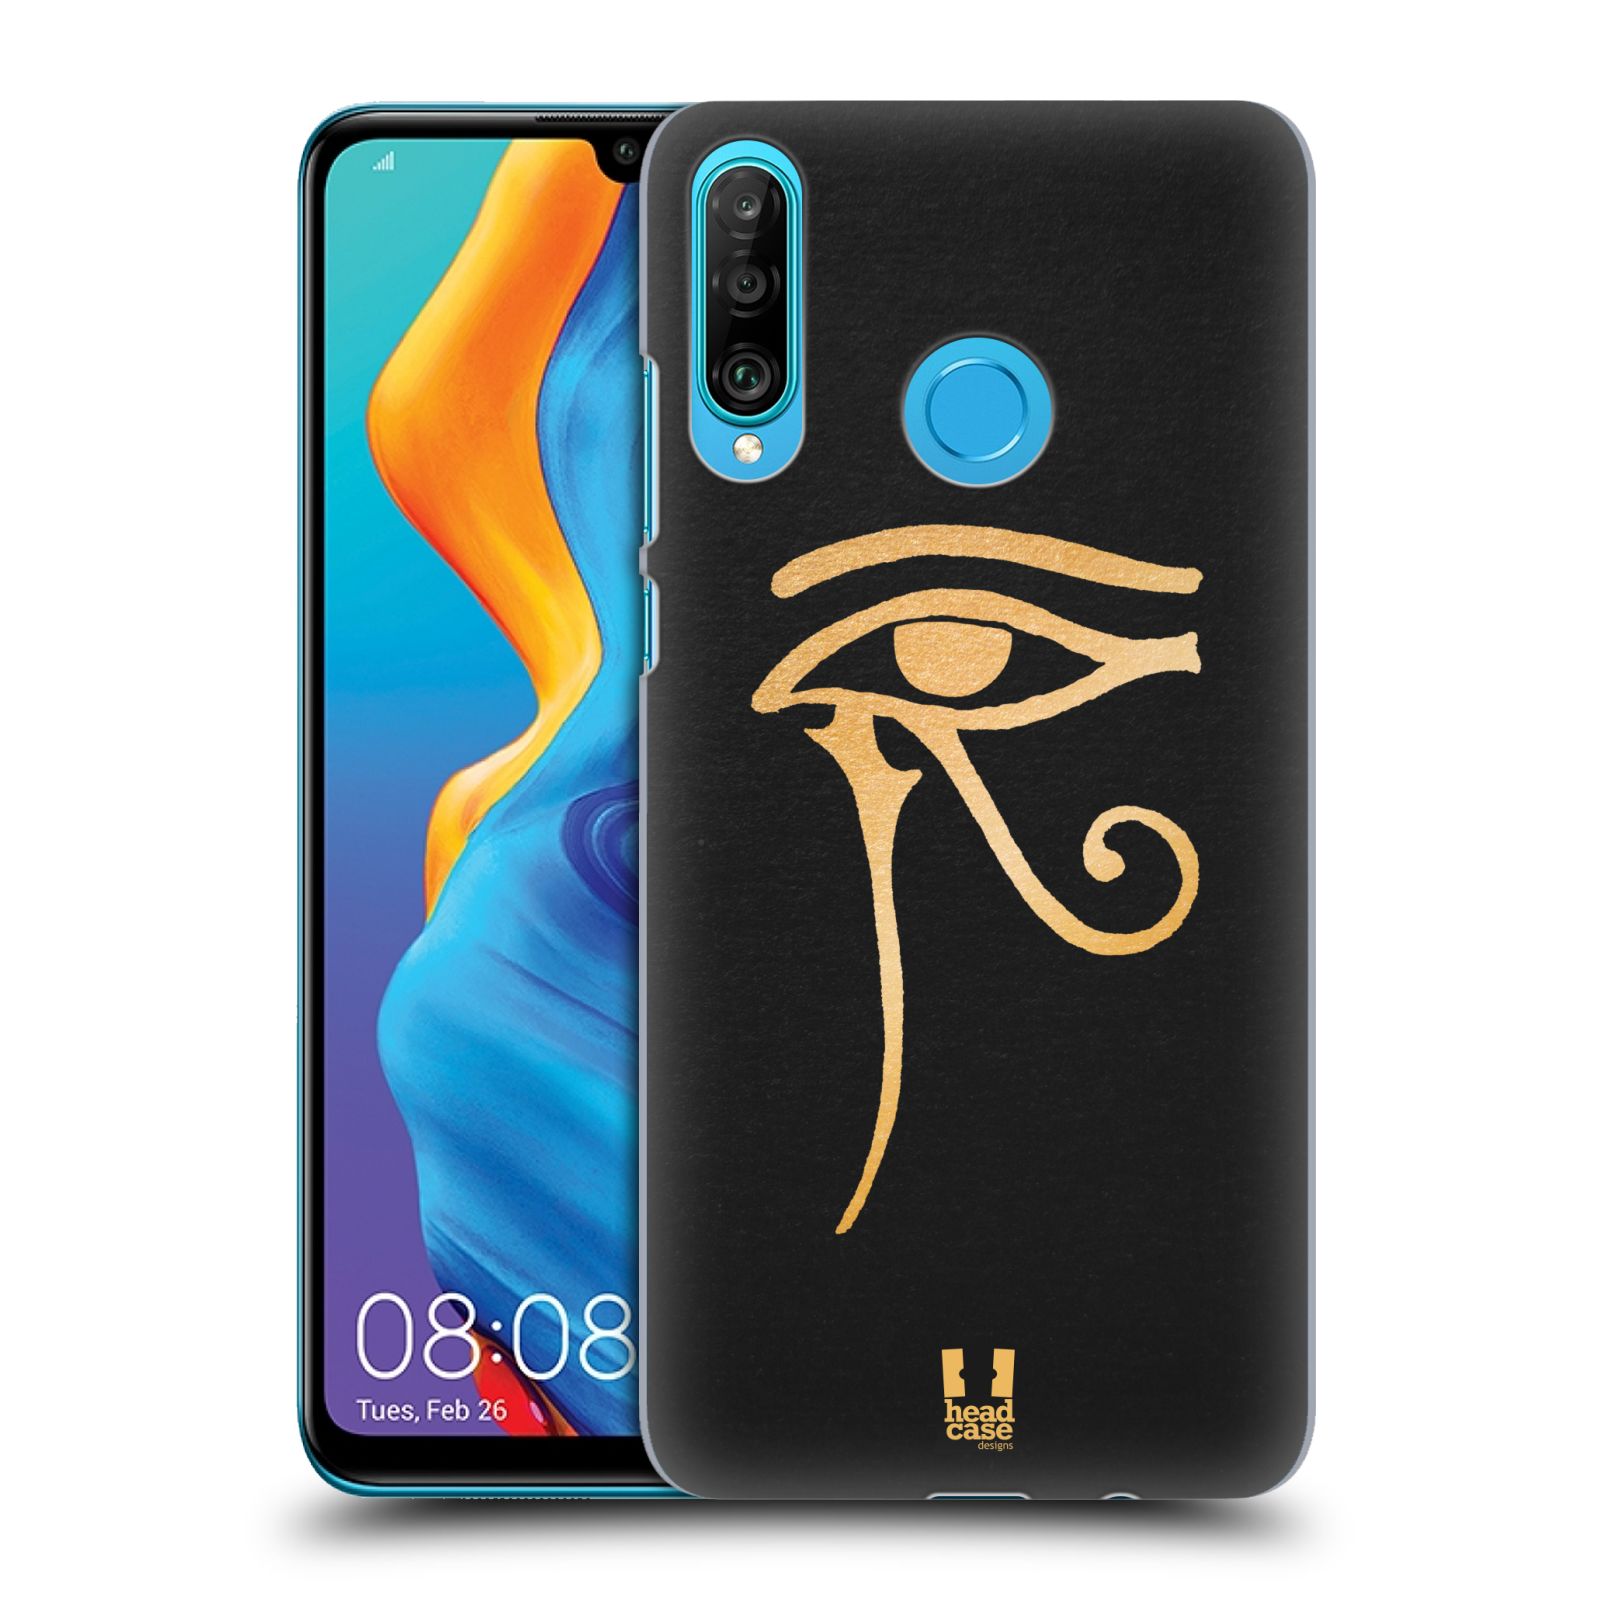 Plastové pouzdro na mobil Huawei P30 Lite - Head Case - EGYPT OKO BOHA RA (Plastový kryt, pouzdro, obal na mobilní telefon Huawei P30 Lite Dual Sim (MAR-L01A, MAR-L21A, MAR-LX1A) s motivem EGYPT OKO BOHA RA)